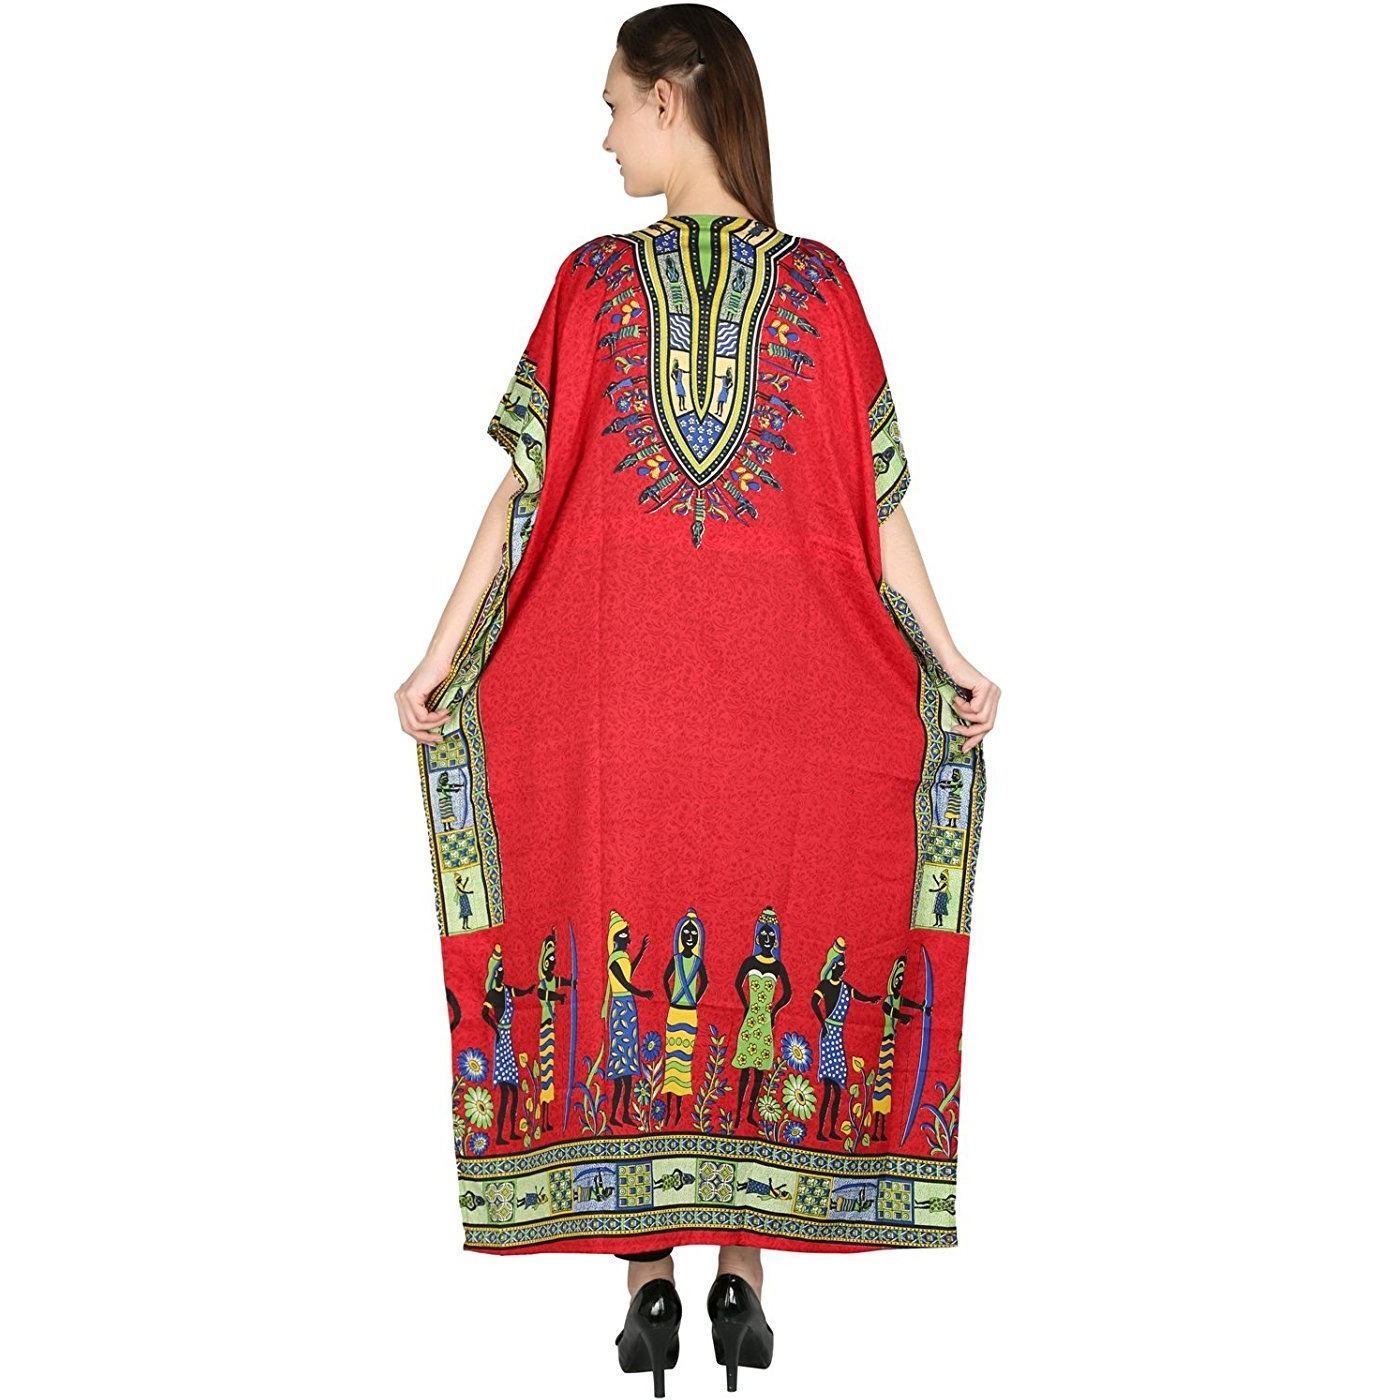 Winmaarc African Dashiki Kaftan Boho Hippe Dress Long length Maxi Caftan